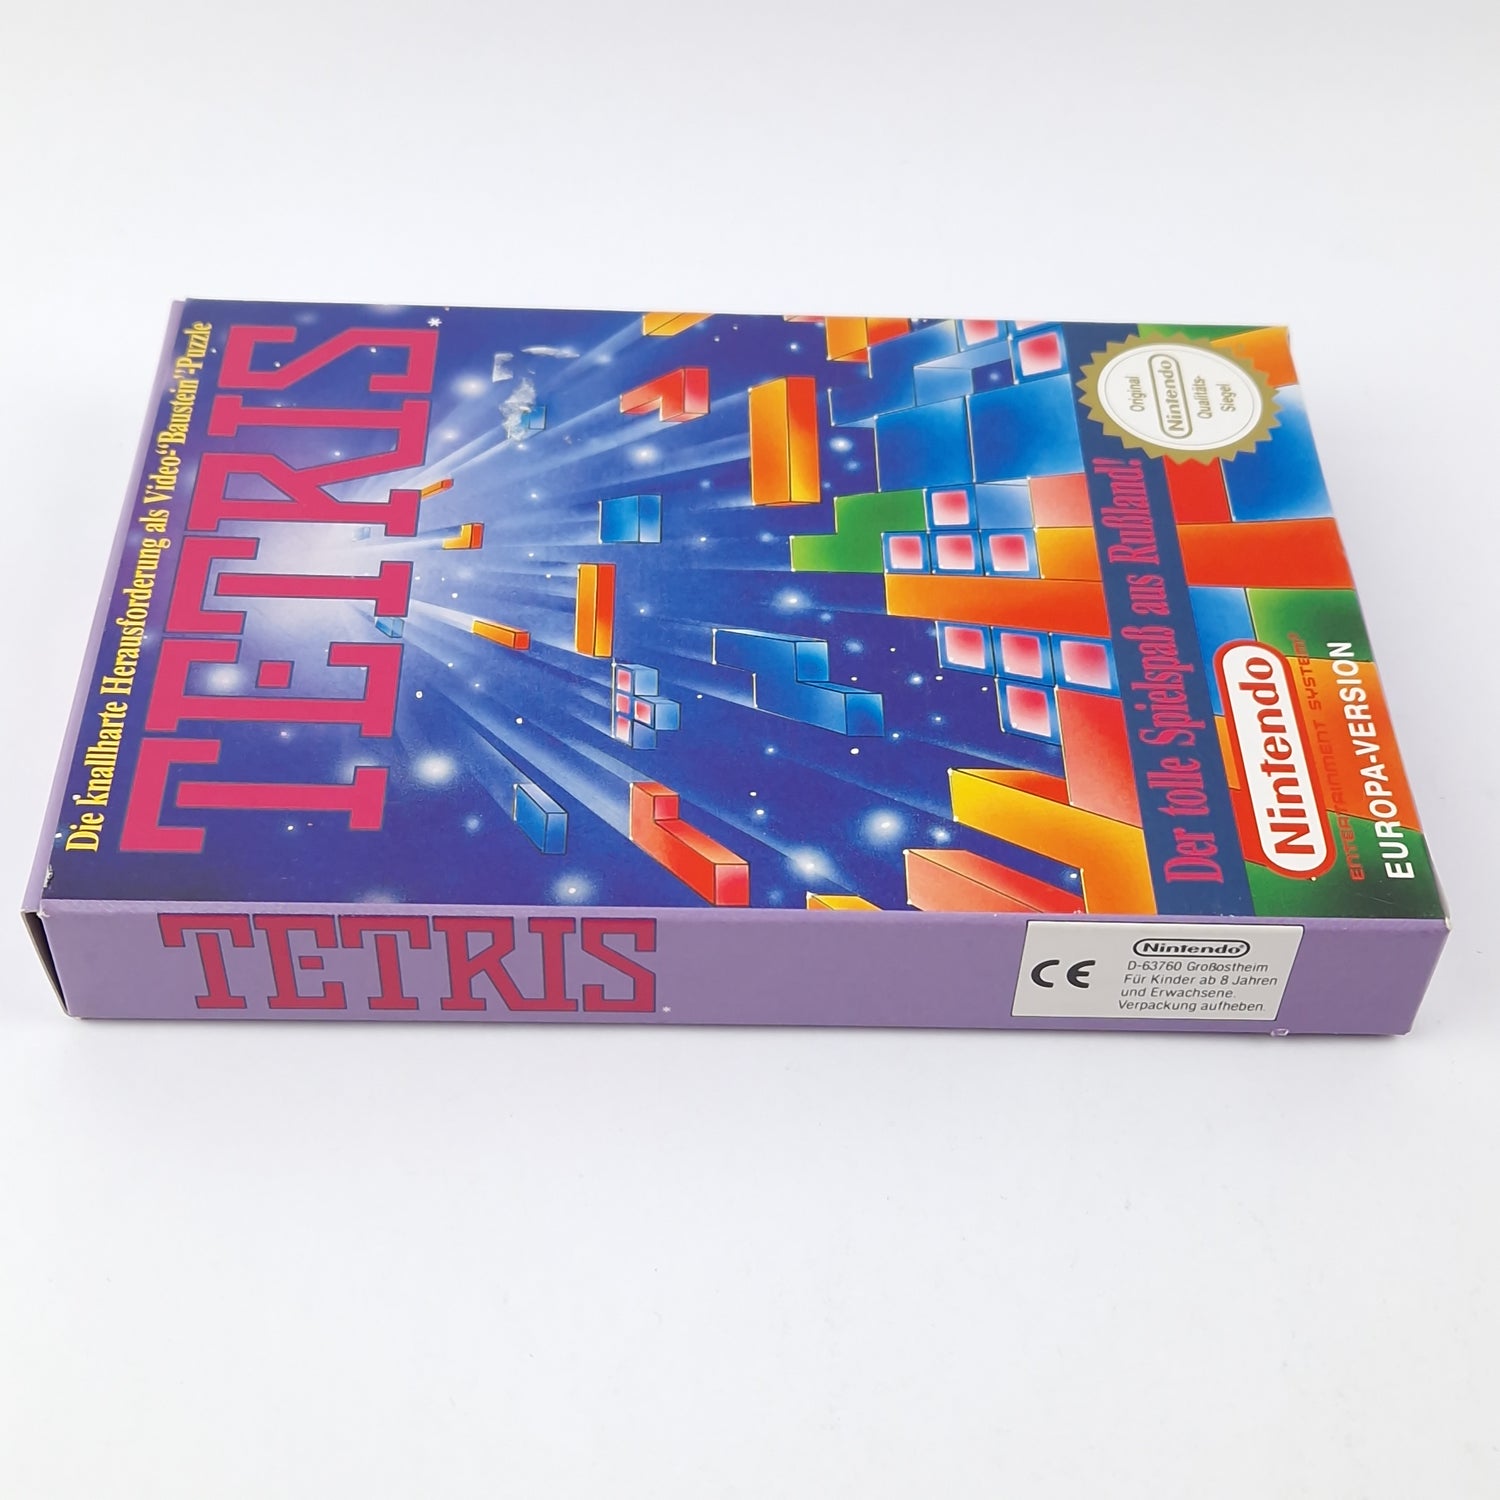 Nintendo NES Game: Tetris - Module Cartridge Instructions OVP cib PAL